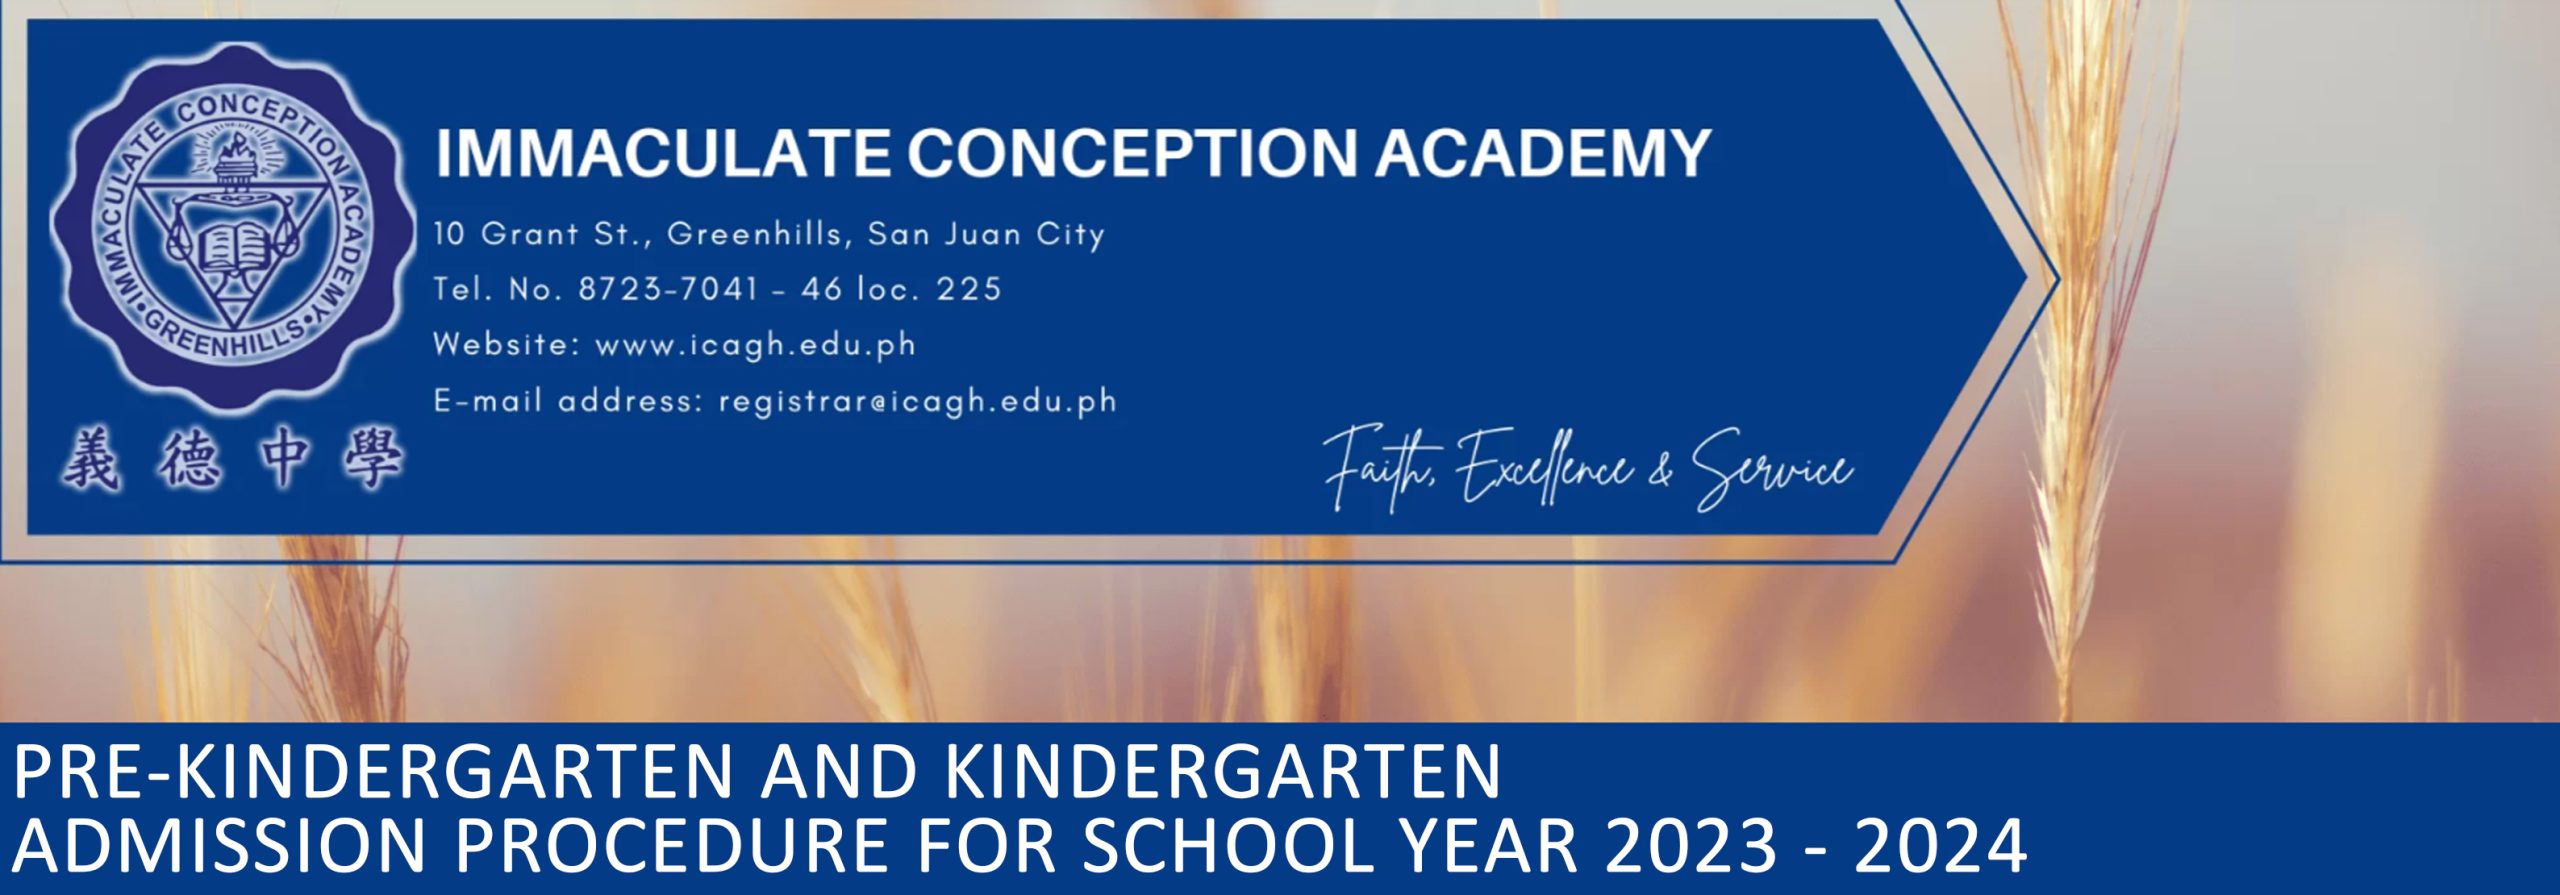 pre kindergarten and kindergarten admission for sy 2023-2024 ICAGH